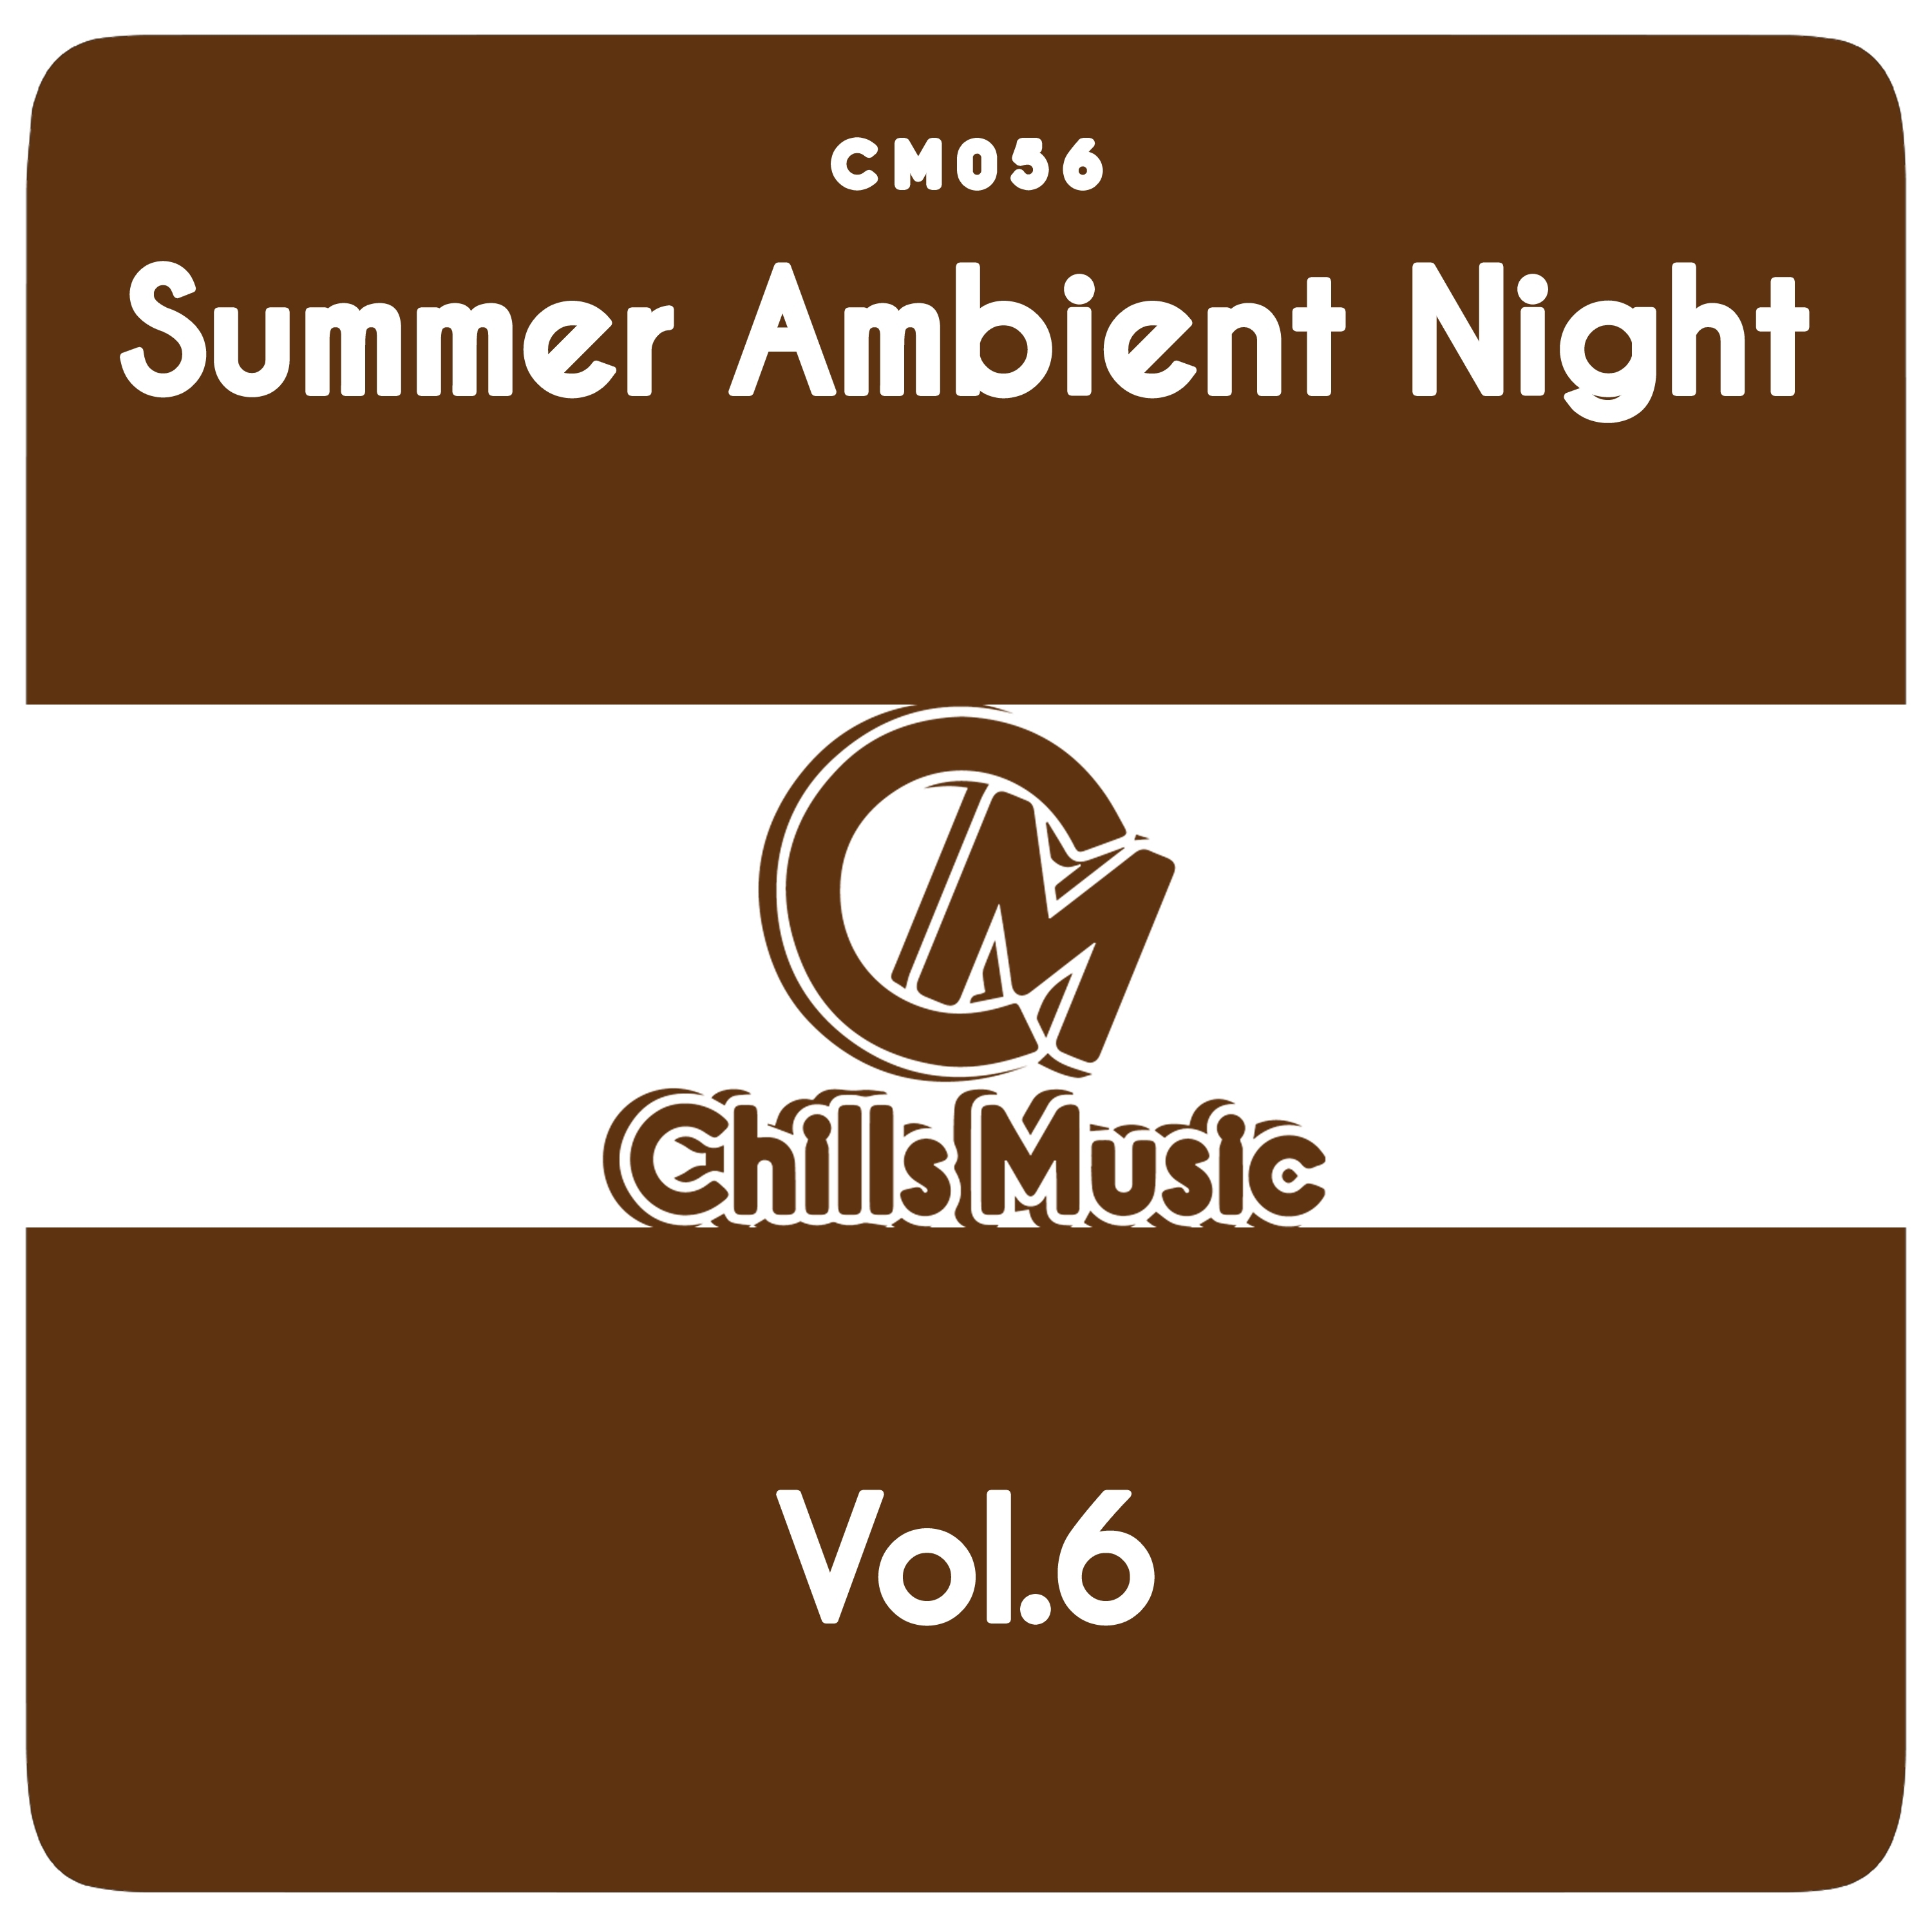 Summer Ambient Night, Vol. 6